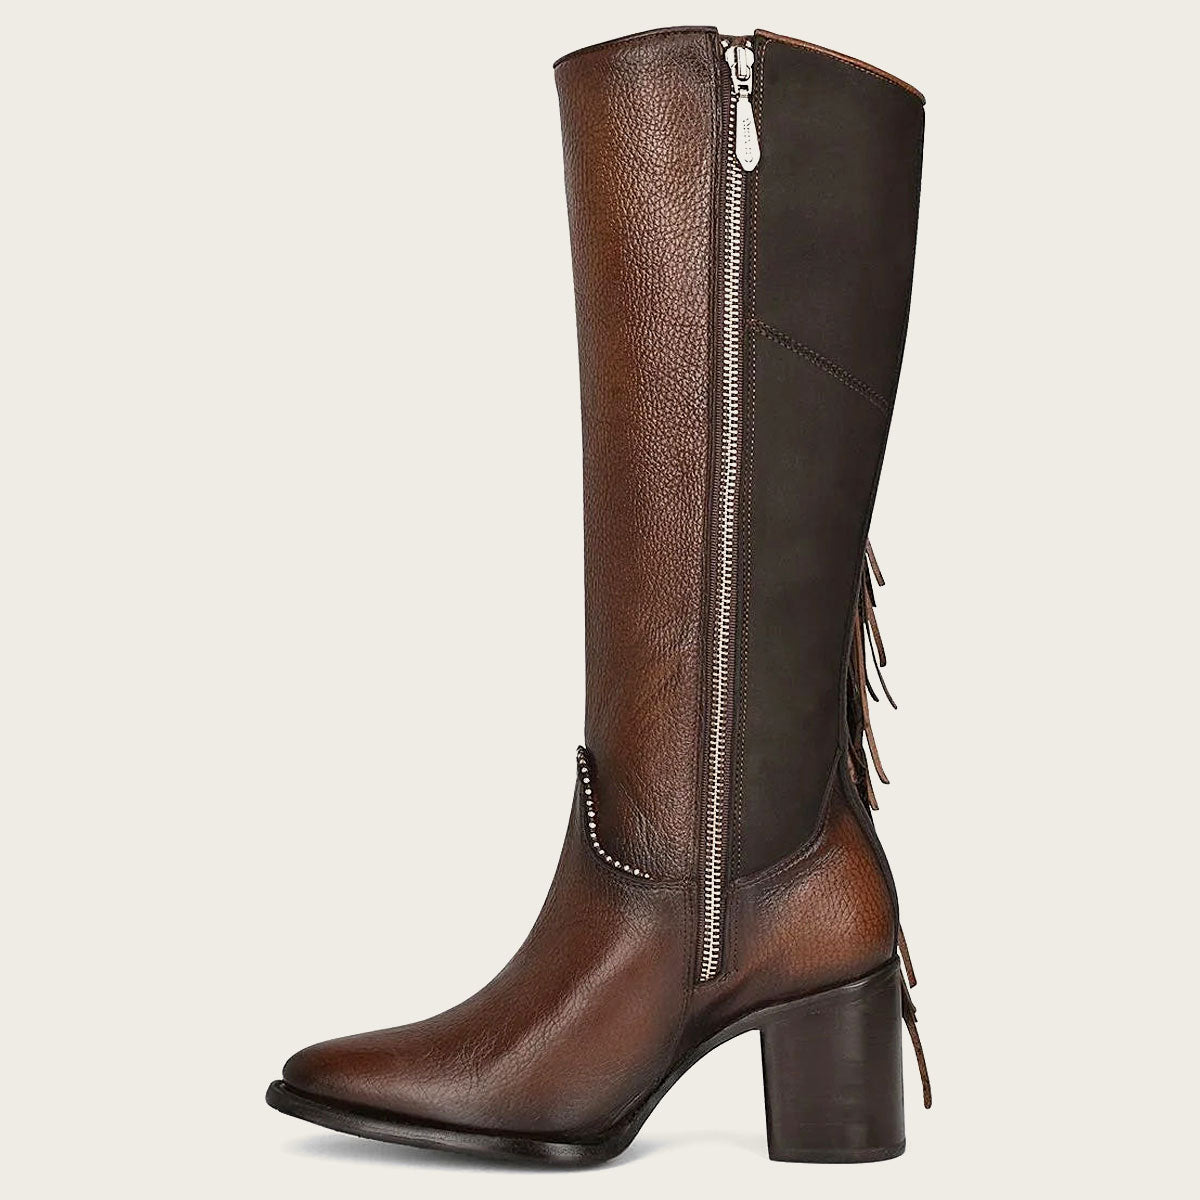 Braiding brown leather boots - 4Q03RS - Cuadra Shop